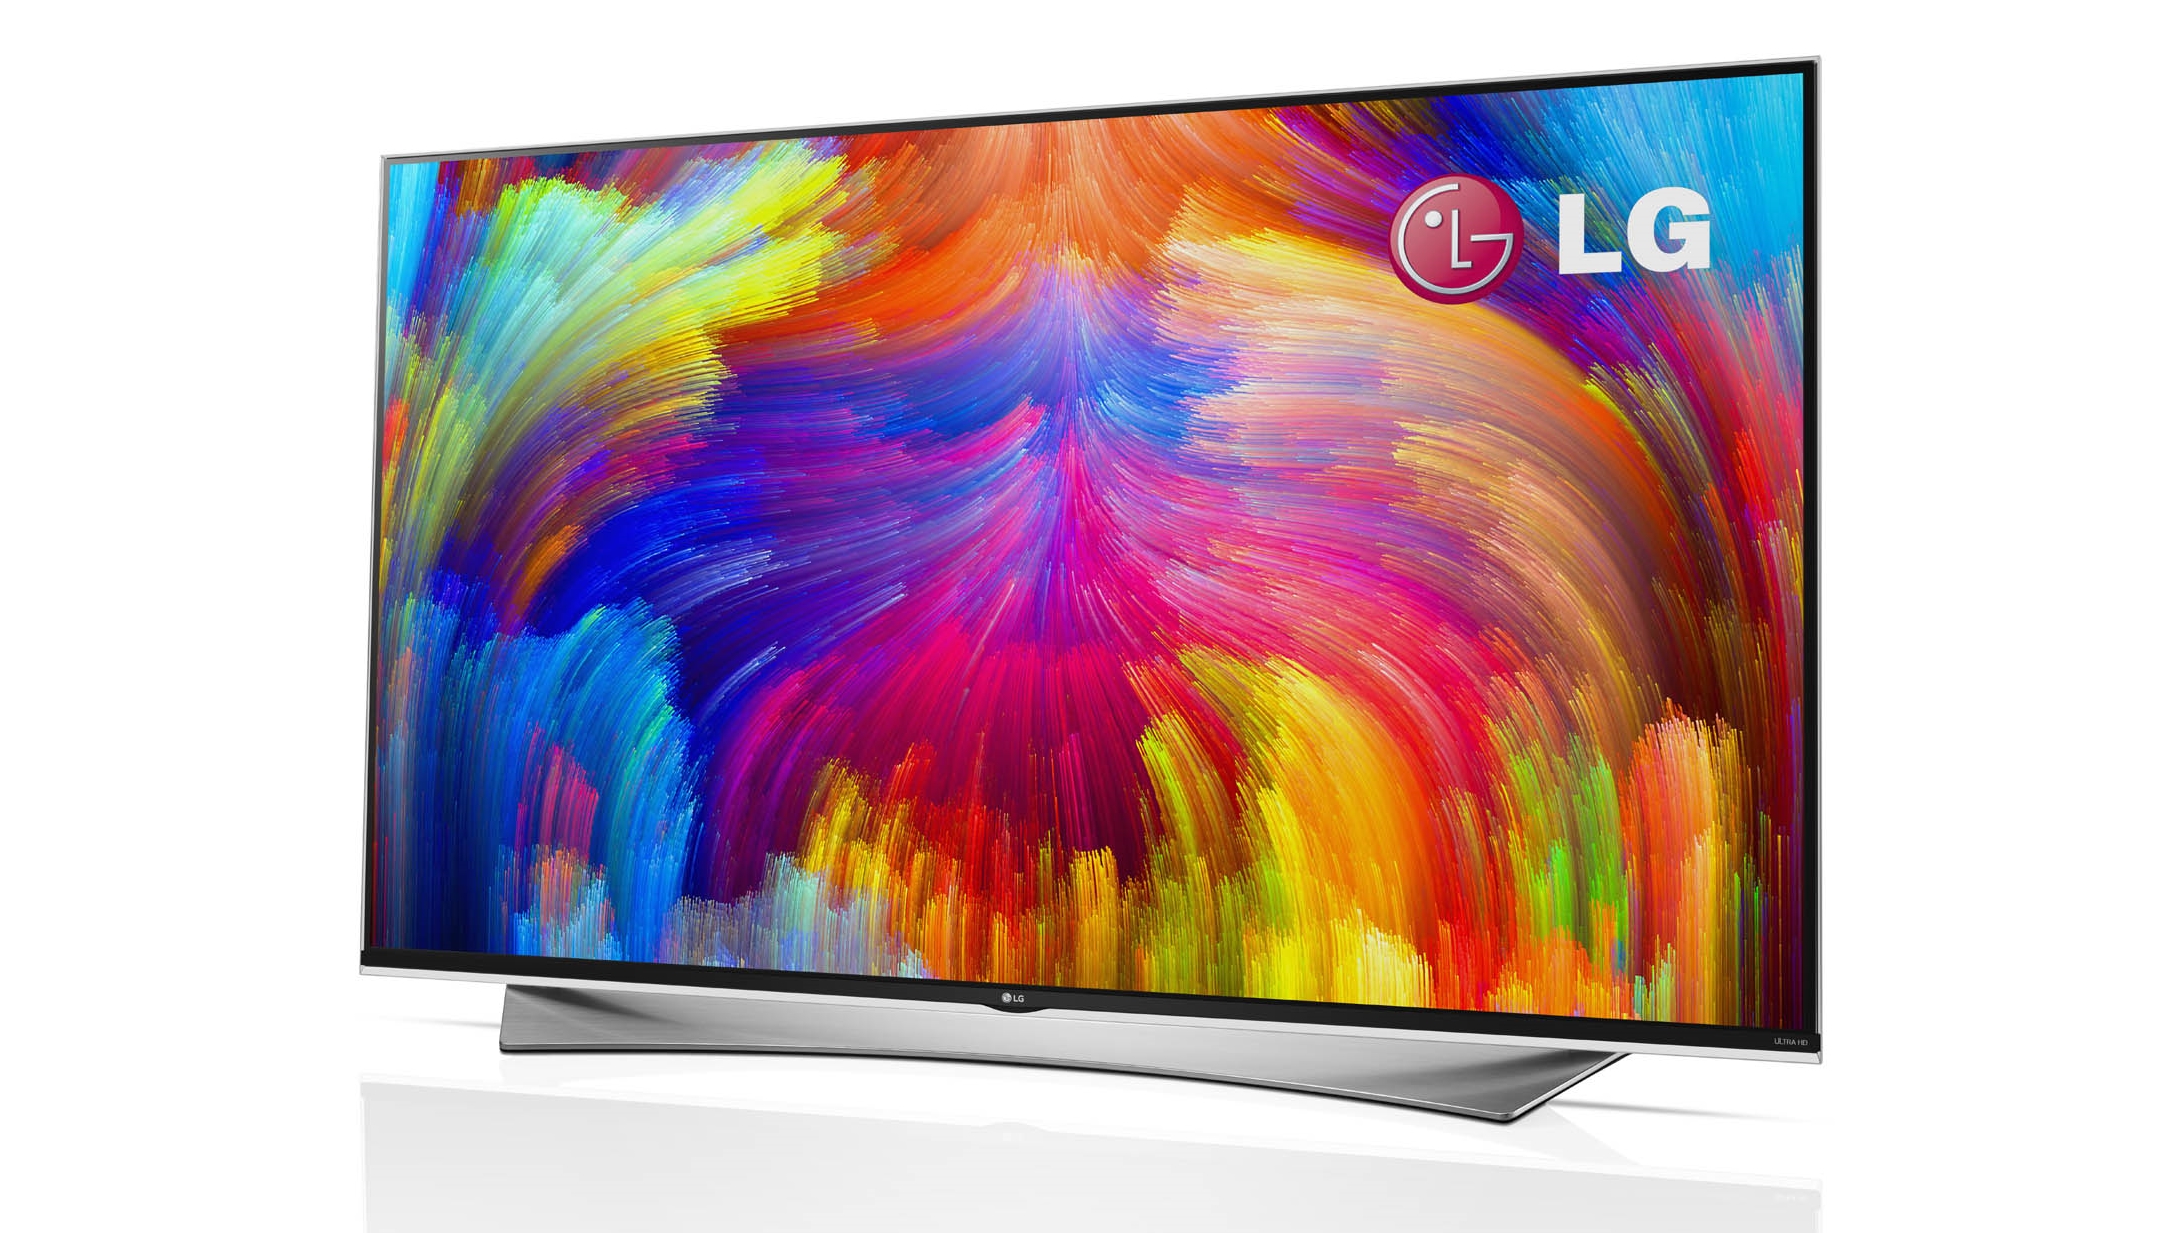 LG confirma la tecnología Quantum dot para televisores 2015, prevista para el CES